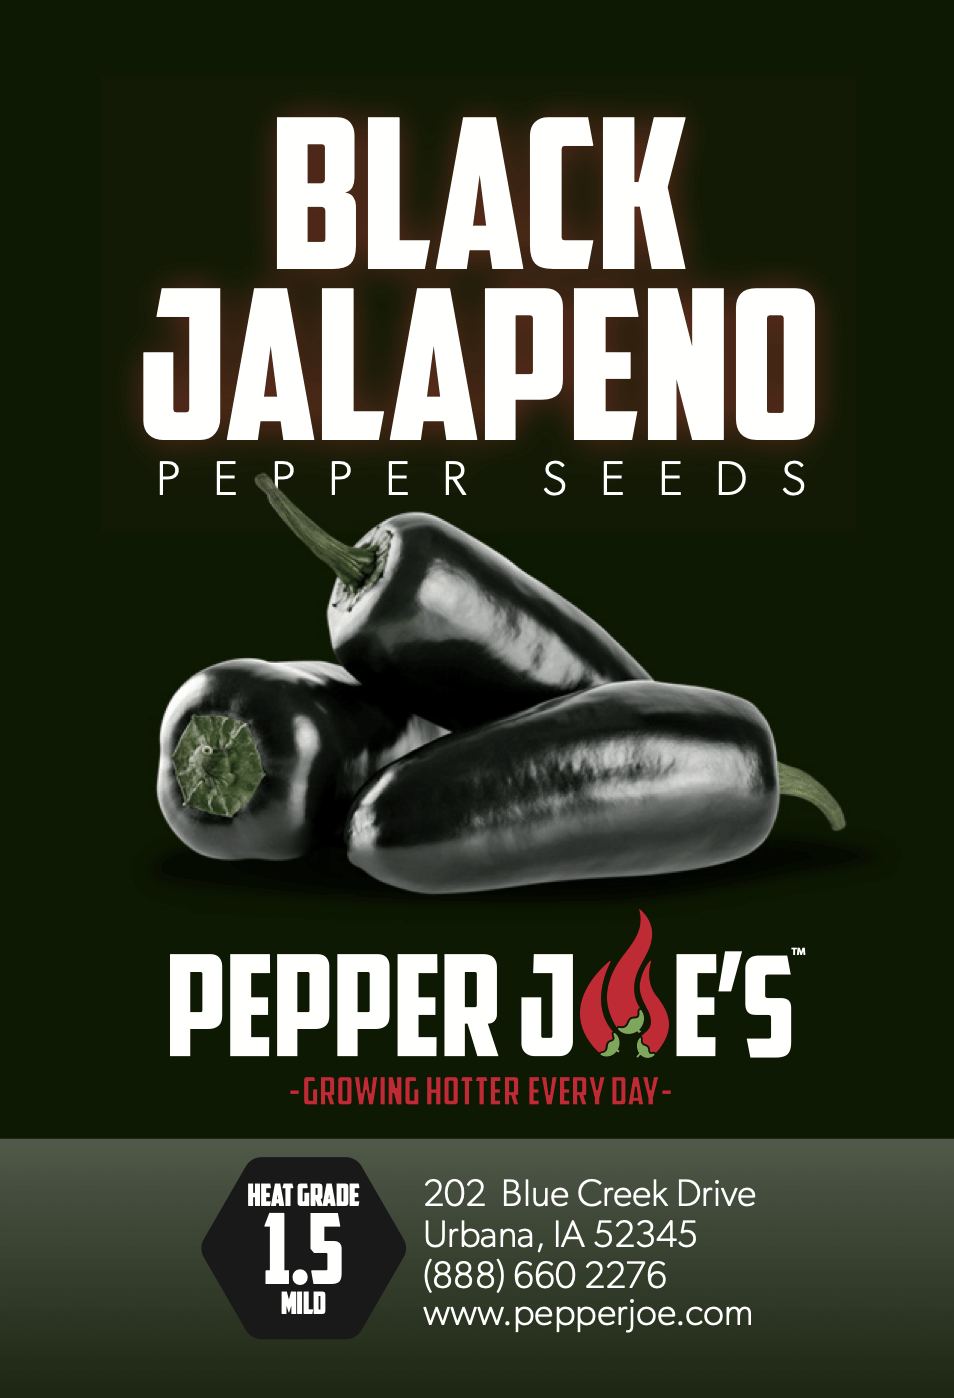 Pepper Joe's Black Jalapeno pepper - seed label of black jalapeno peppers